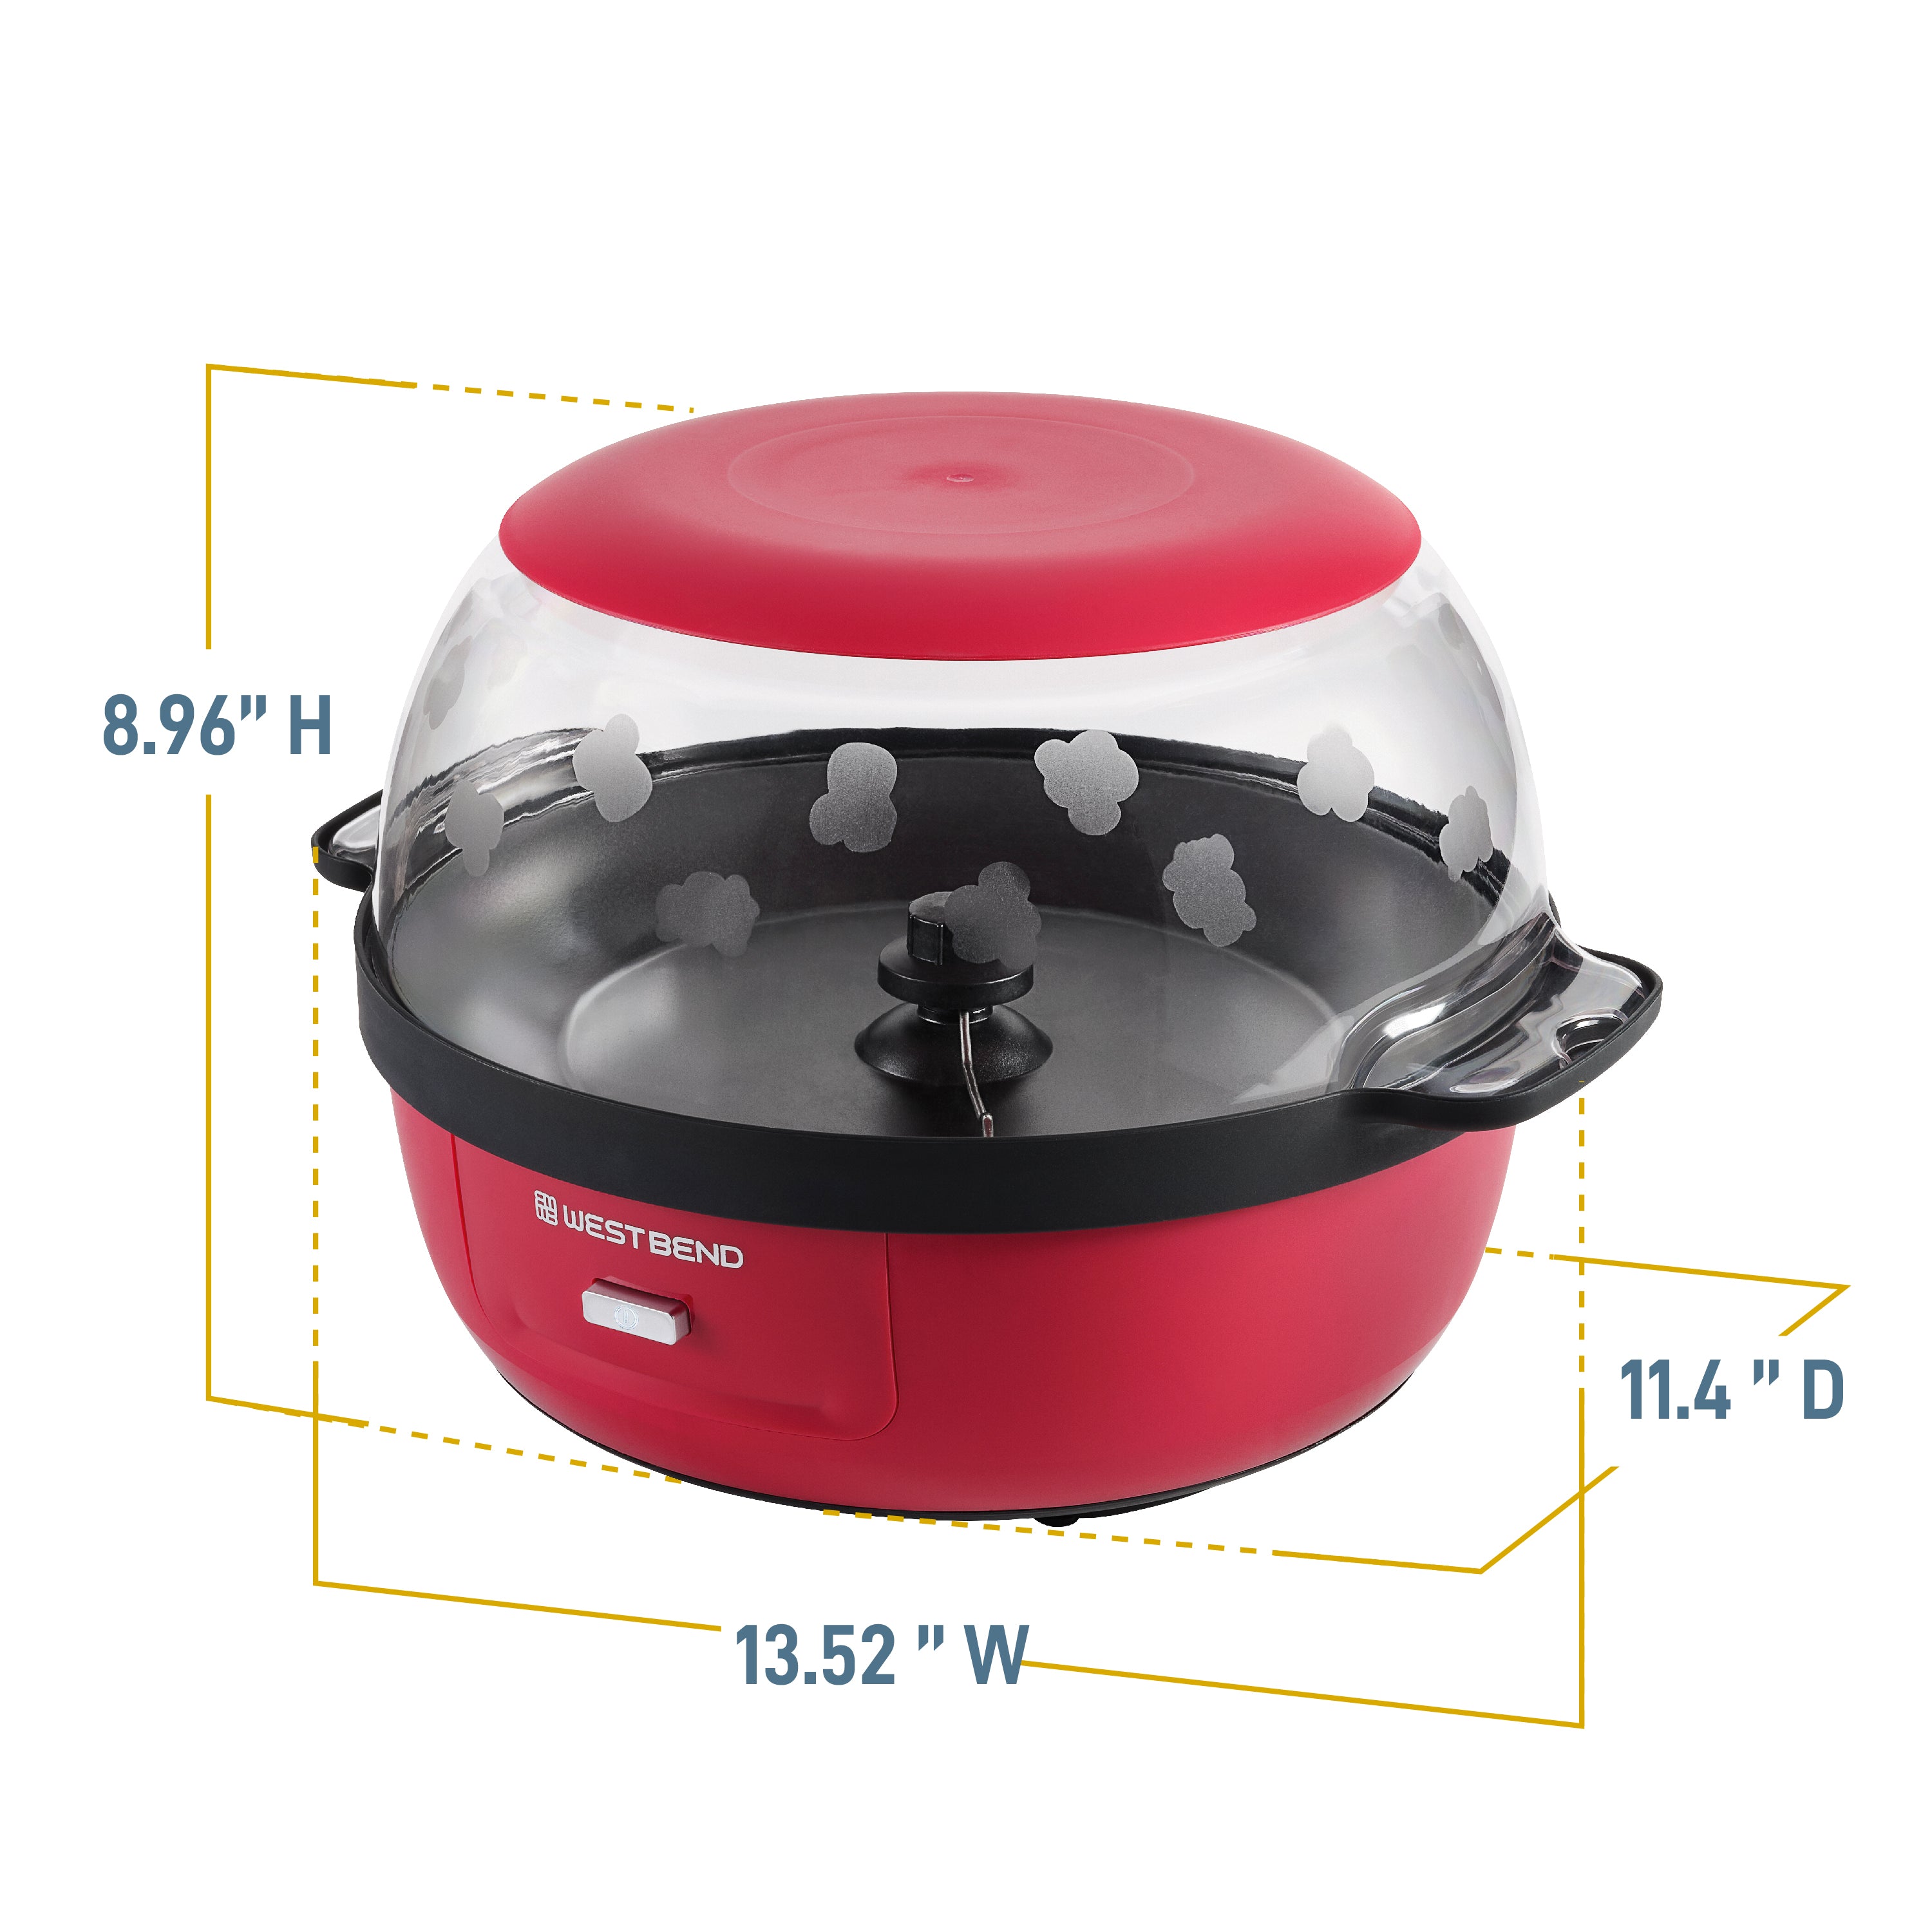 Back to Basics Stir Crazy 6-Quart Electric Popcorn Popper Mod#PC17583 Red  WORKS